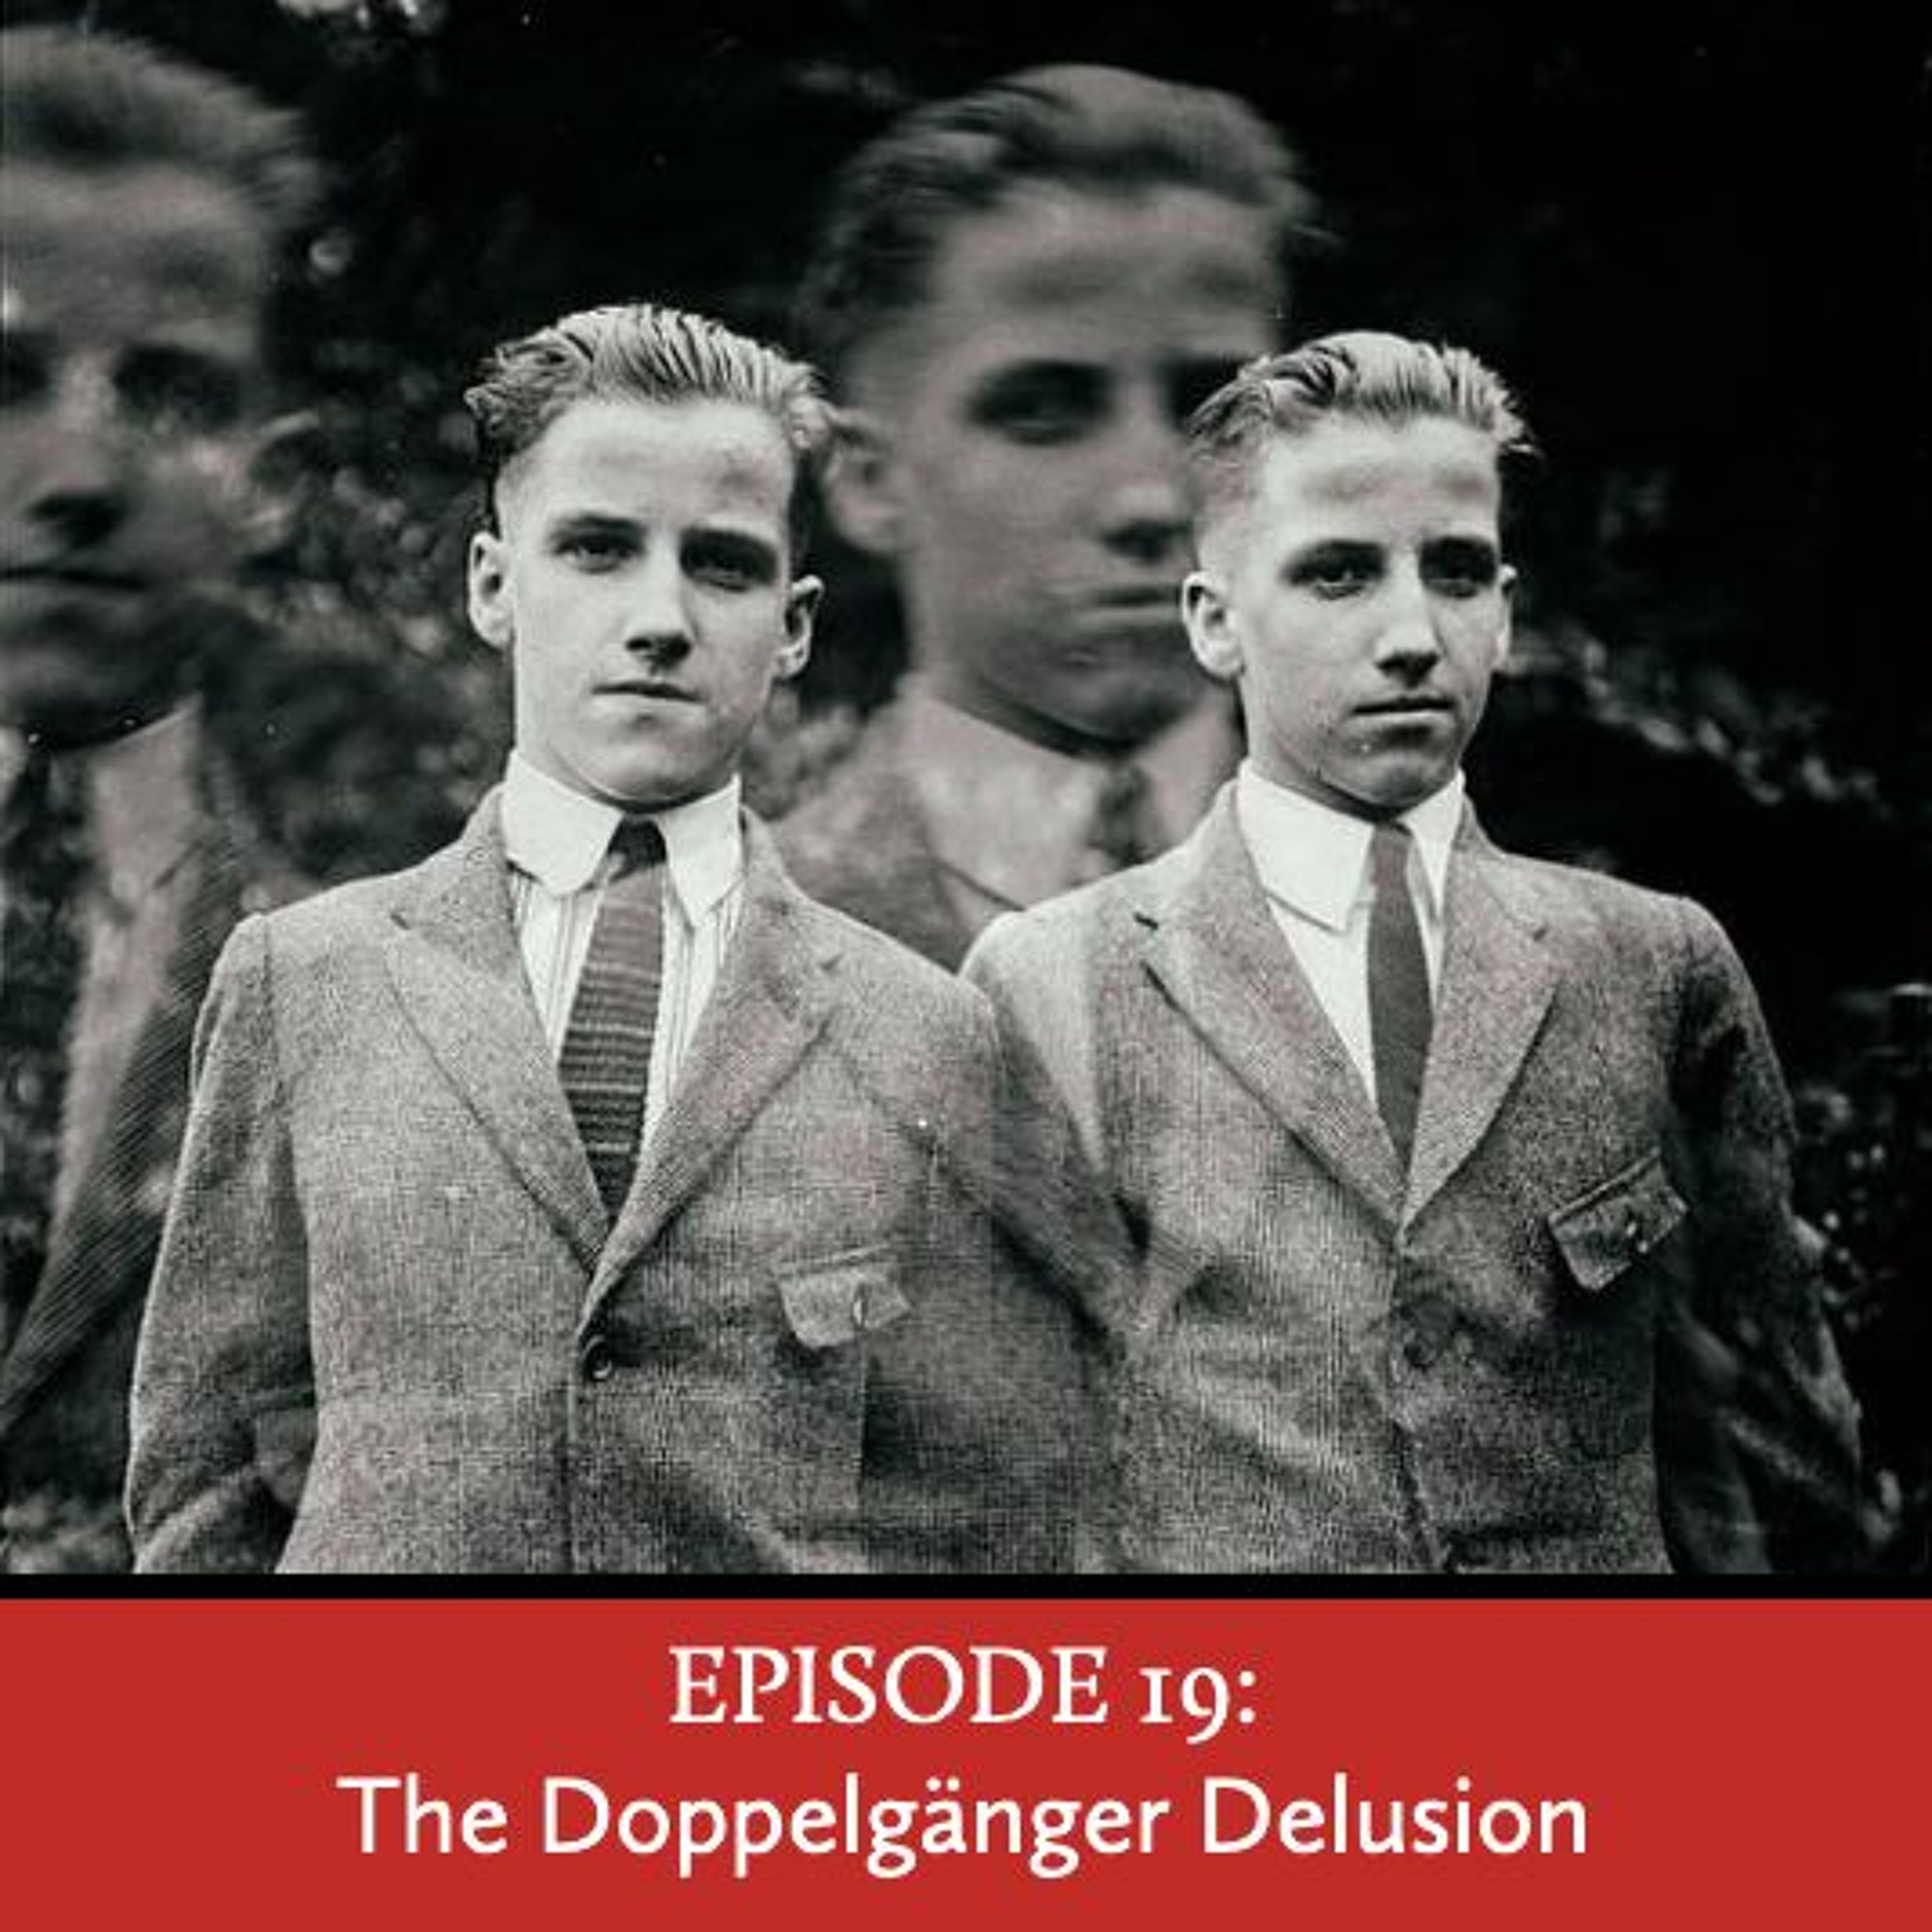 Episode 19: The Doppelgänger Delusion